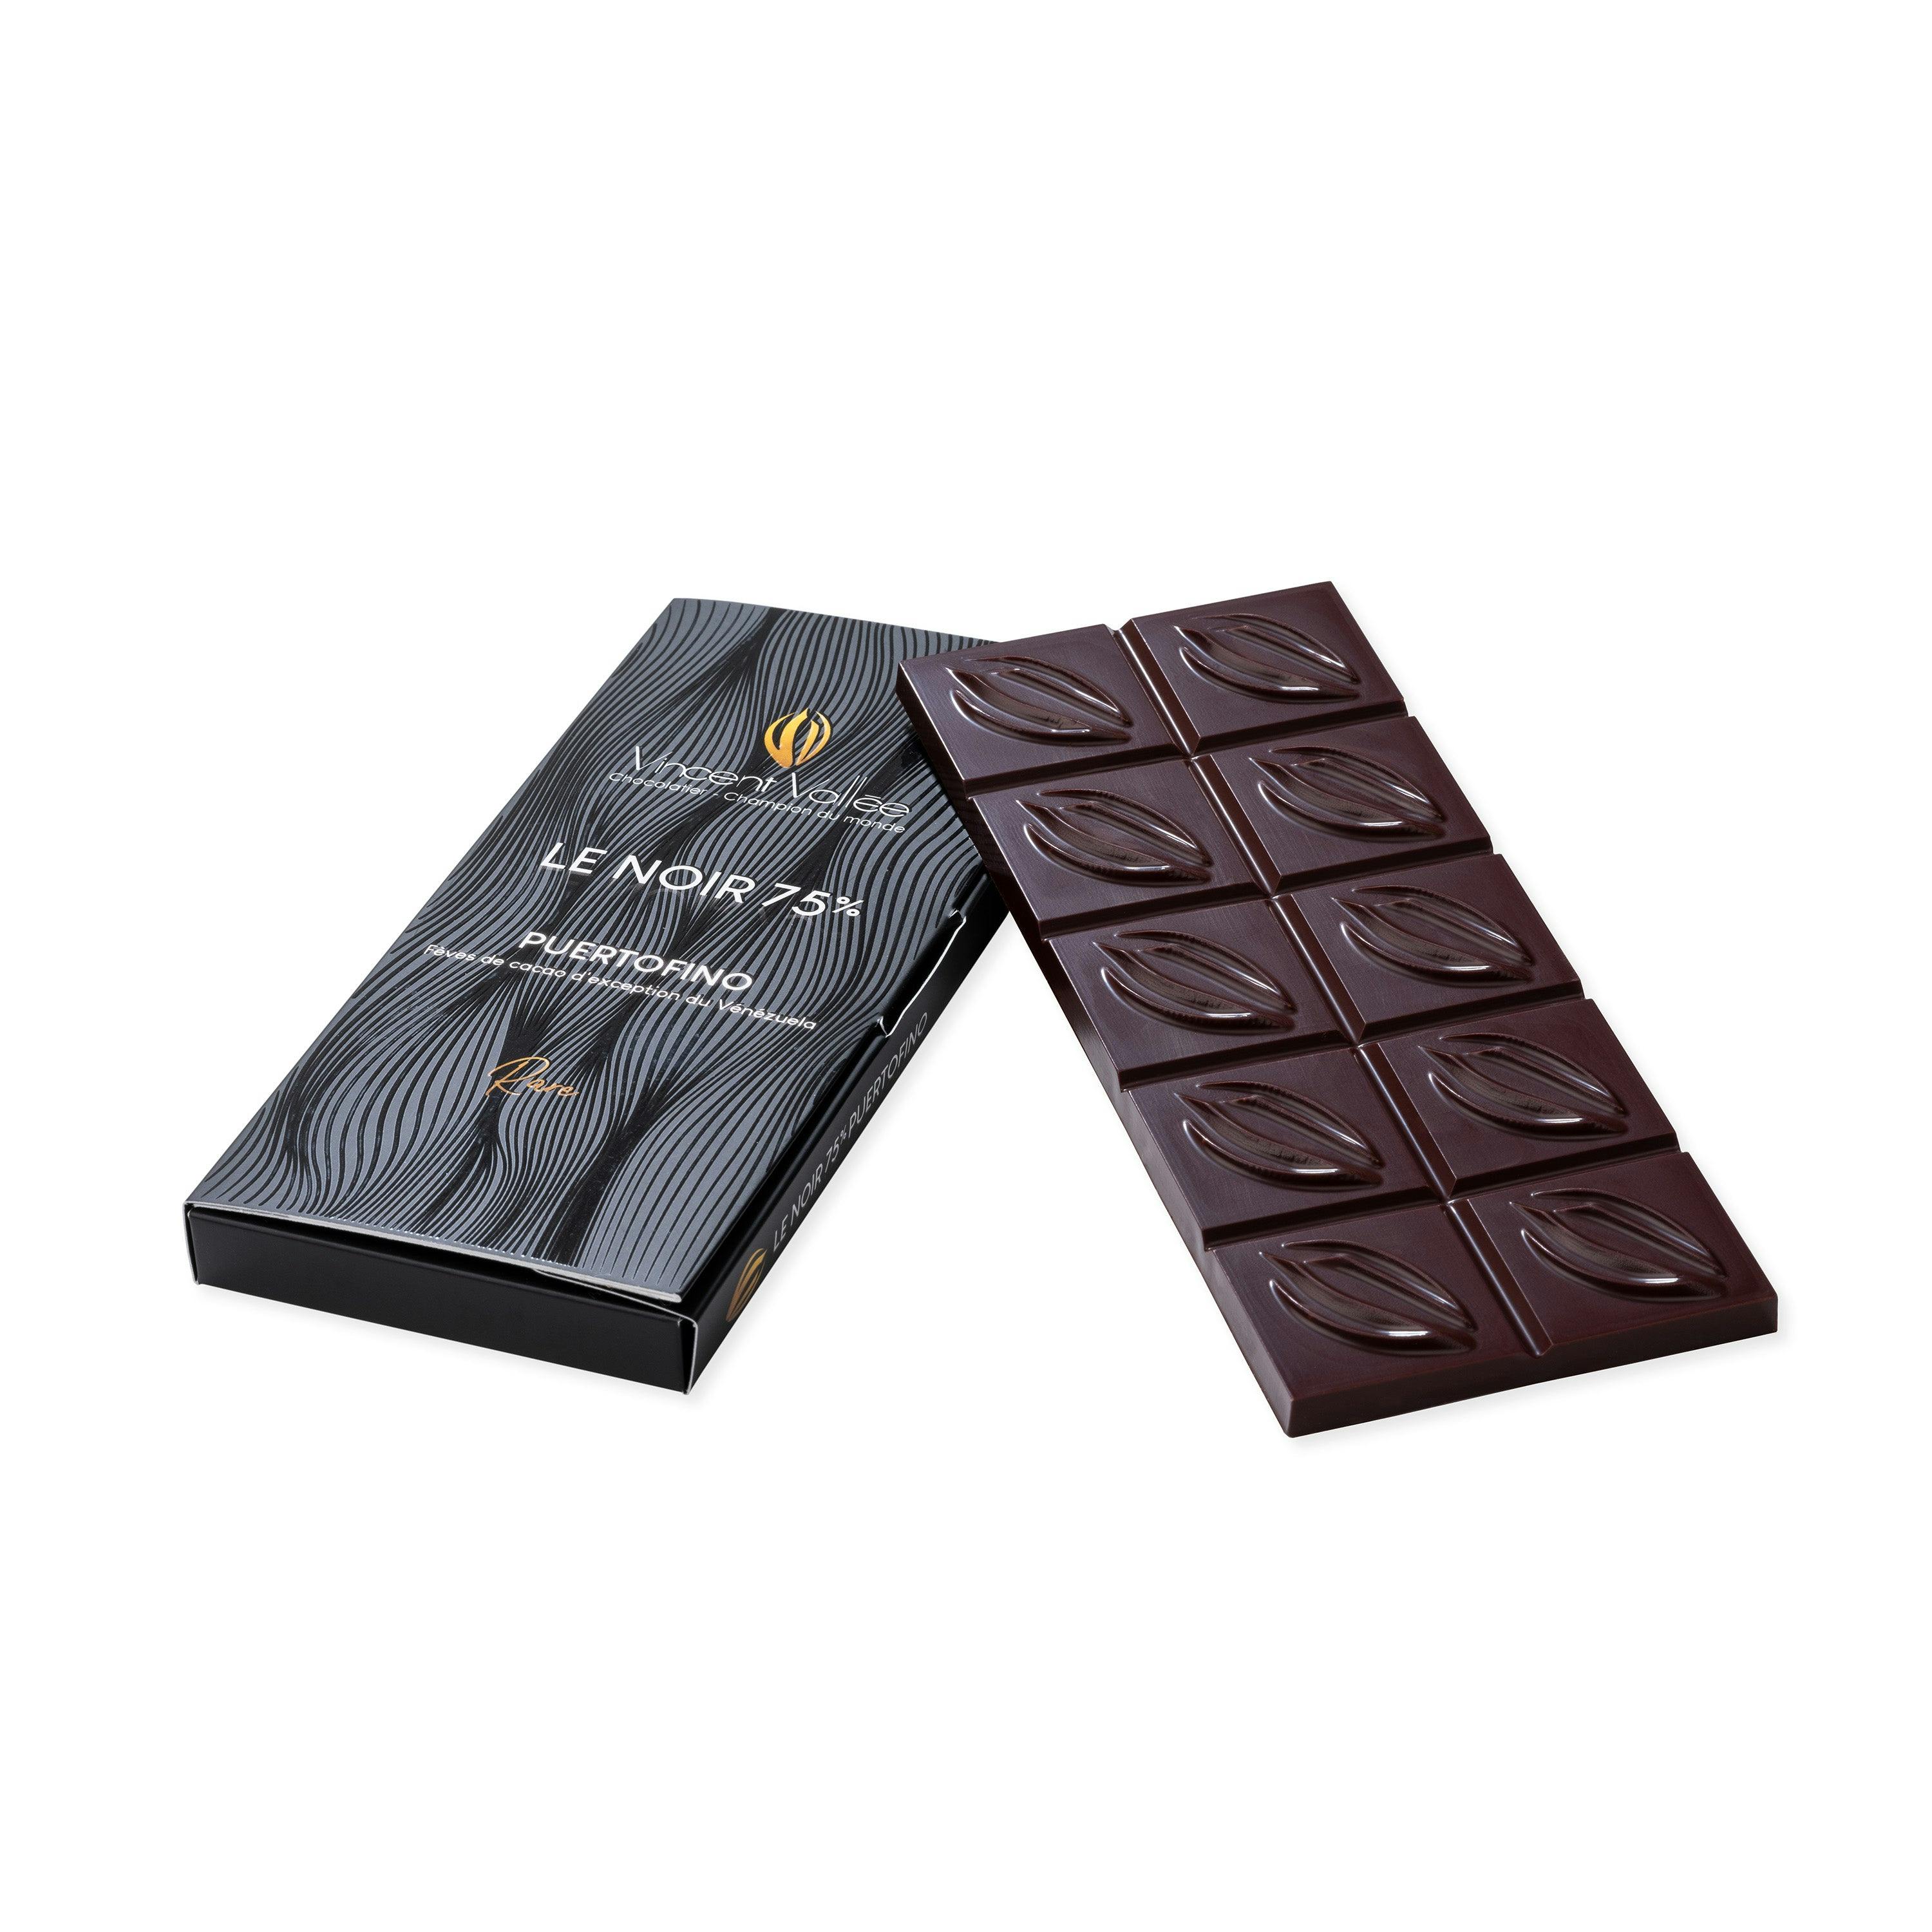 Puertofino 75% - Vincent Vallée world champion chocolatier